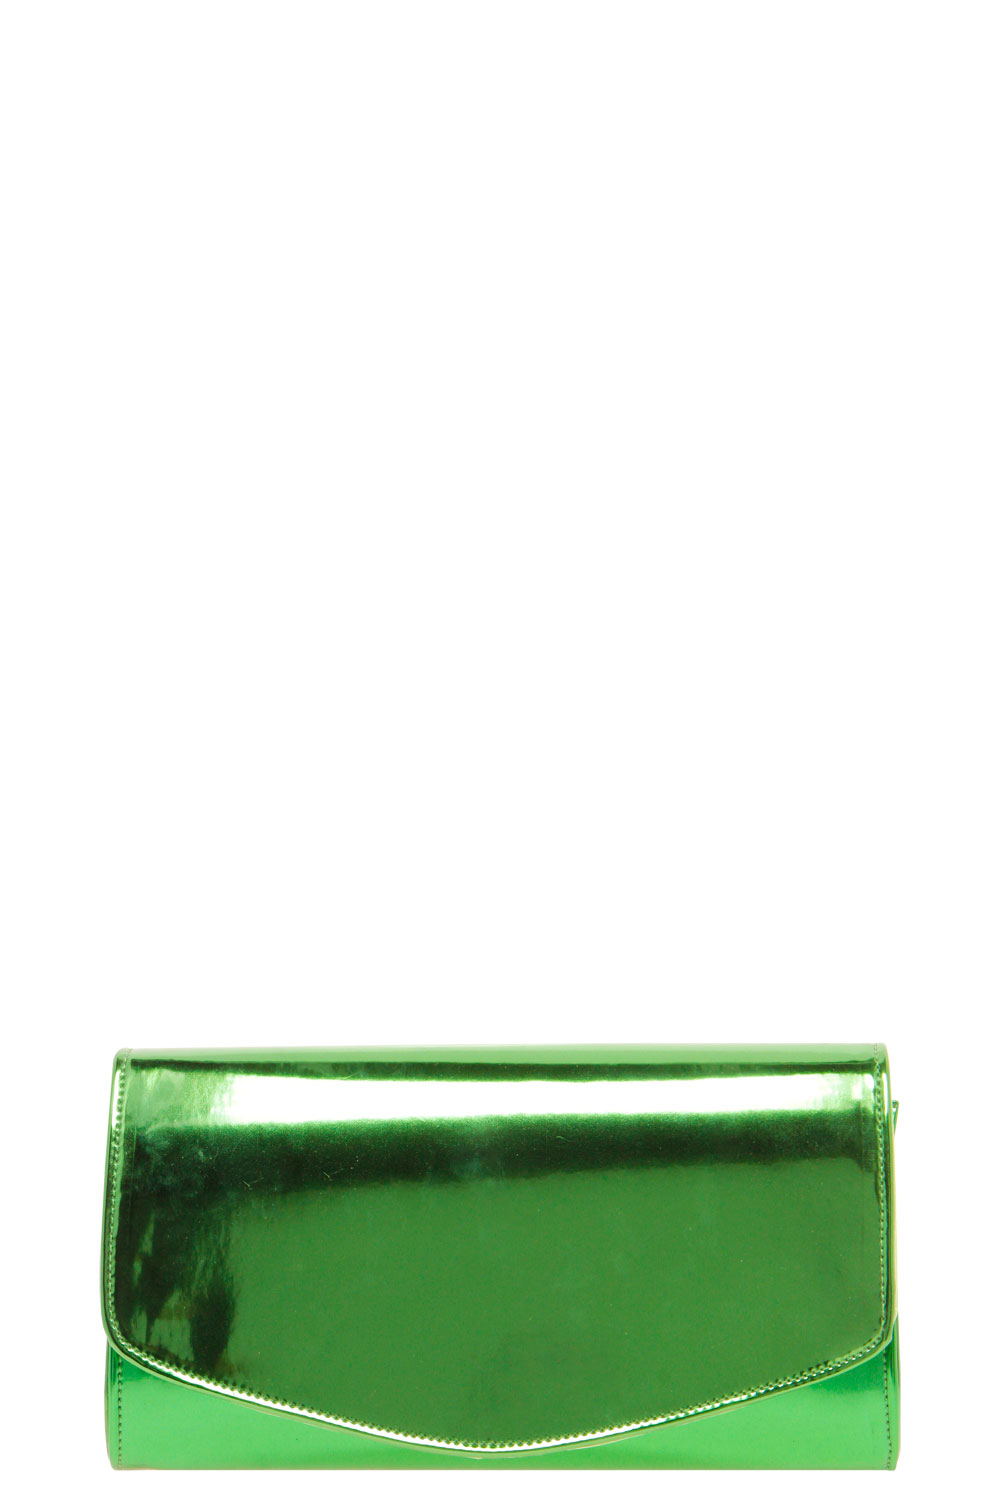 Amanda Hologram Clutch - green, green